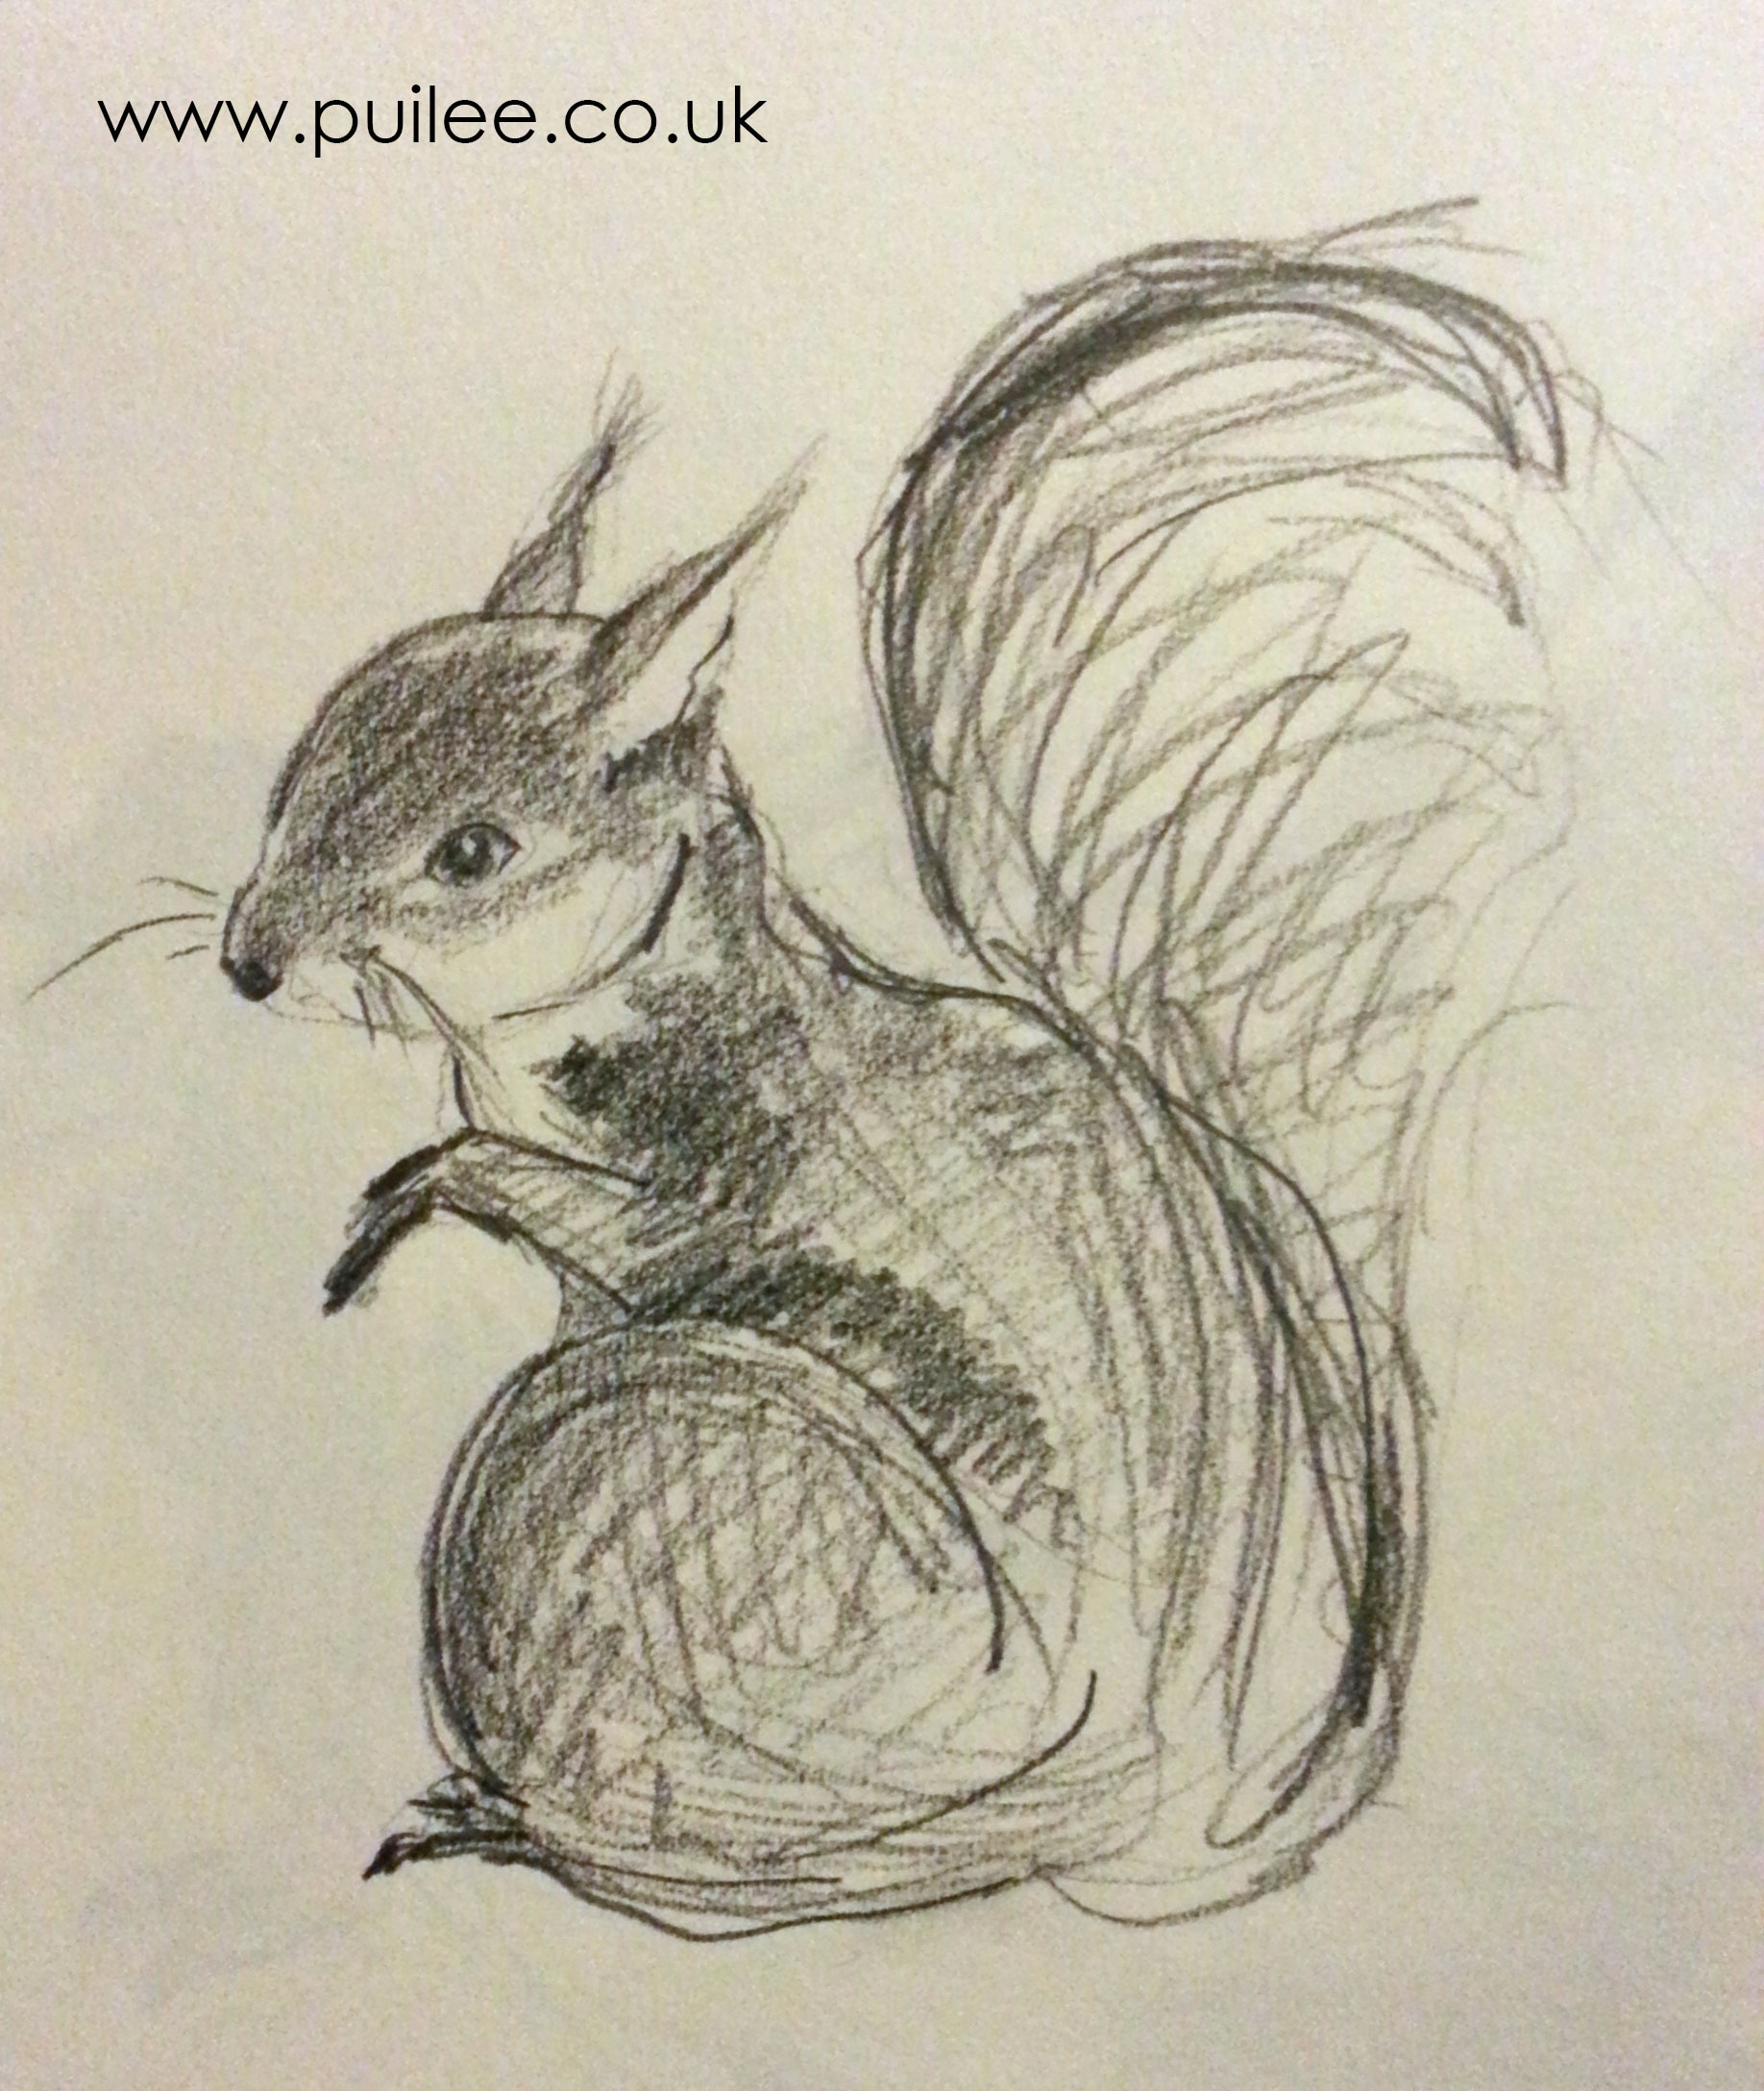 Squirrel (2014) pencil on paper - Pui Lee